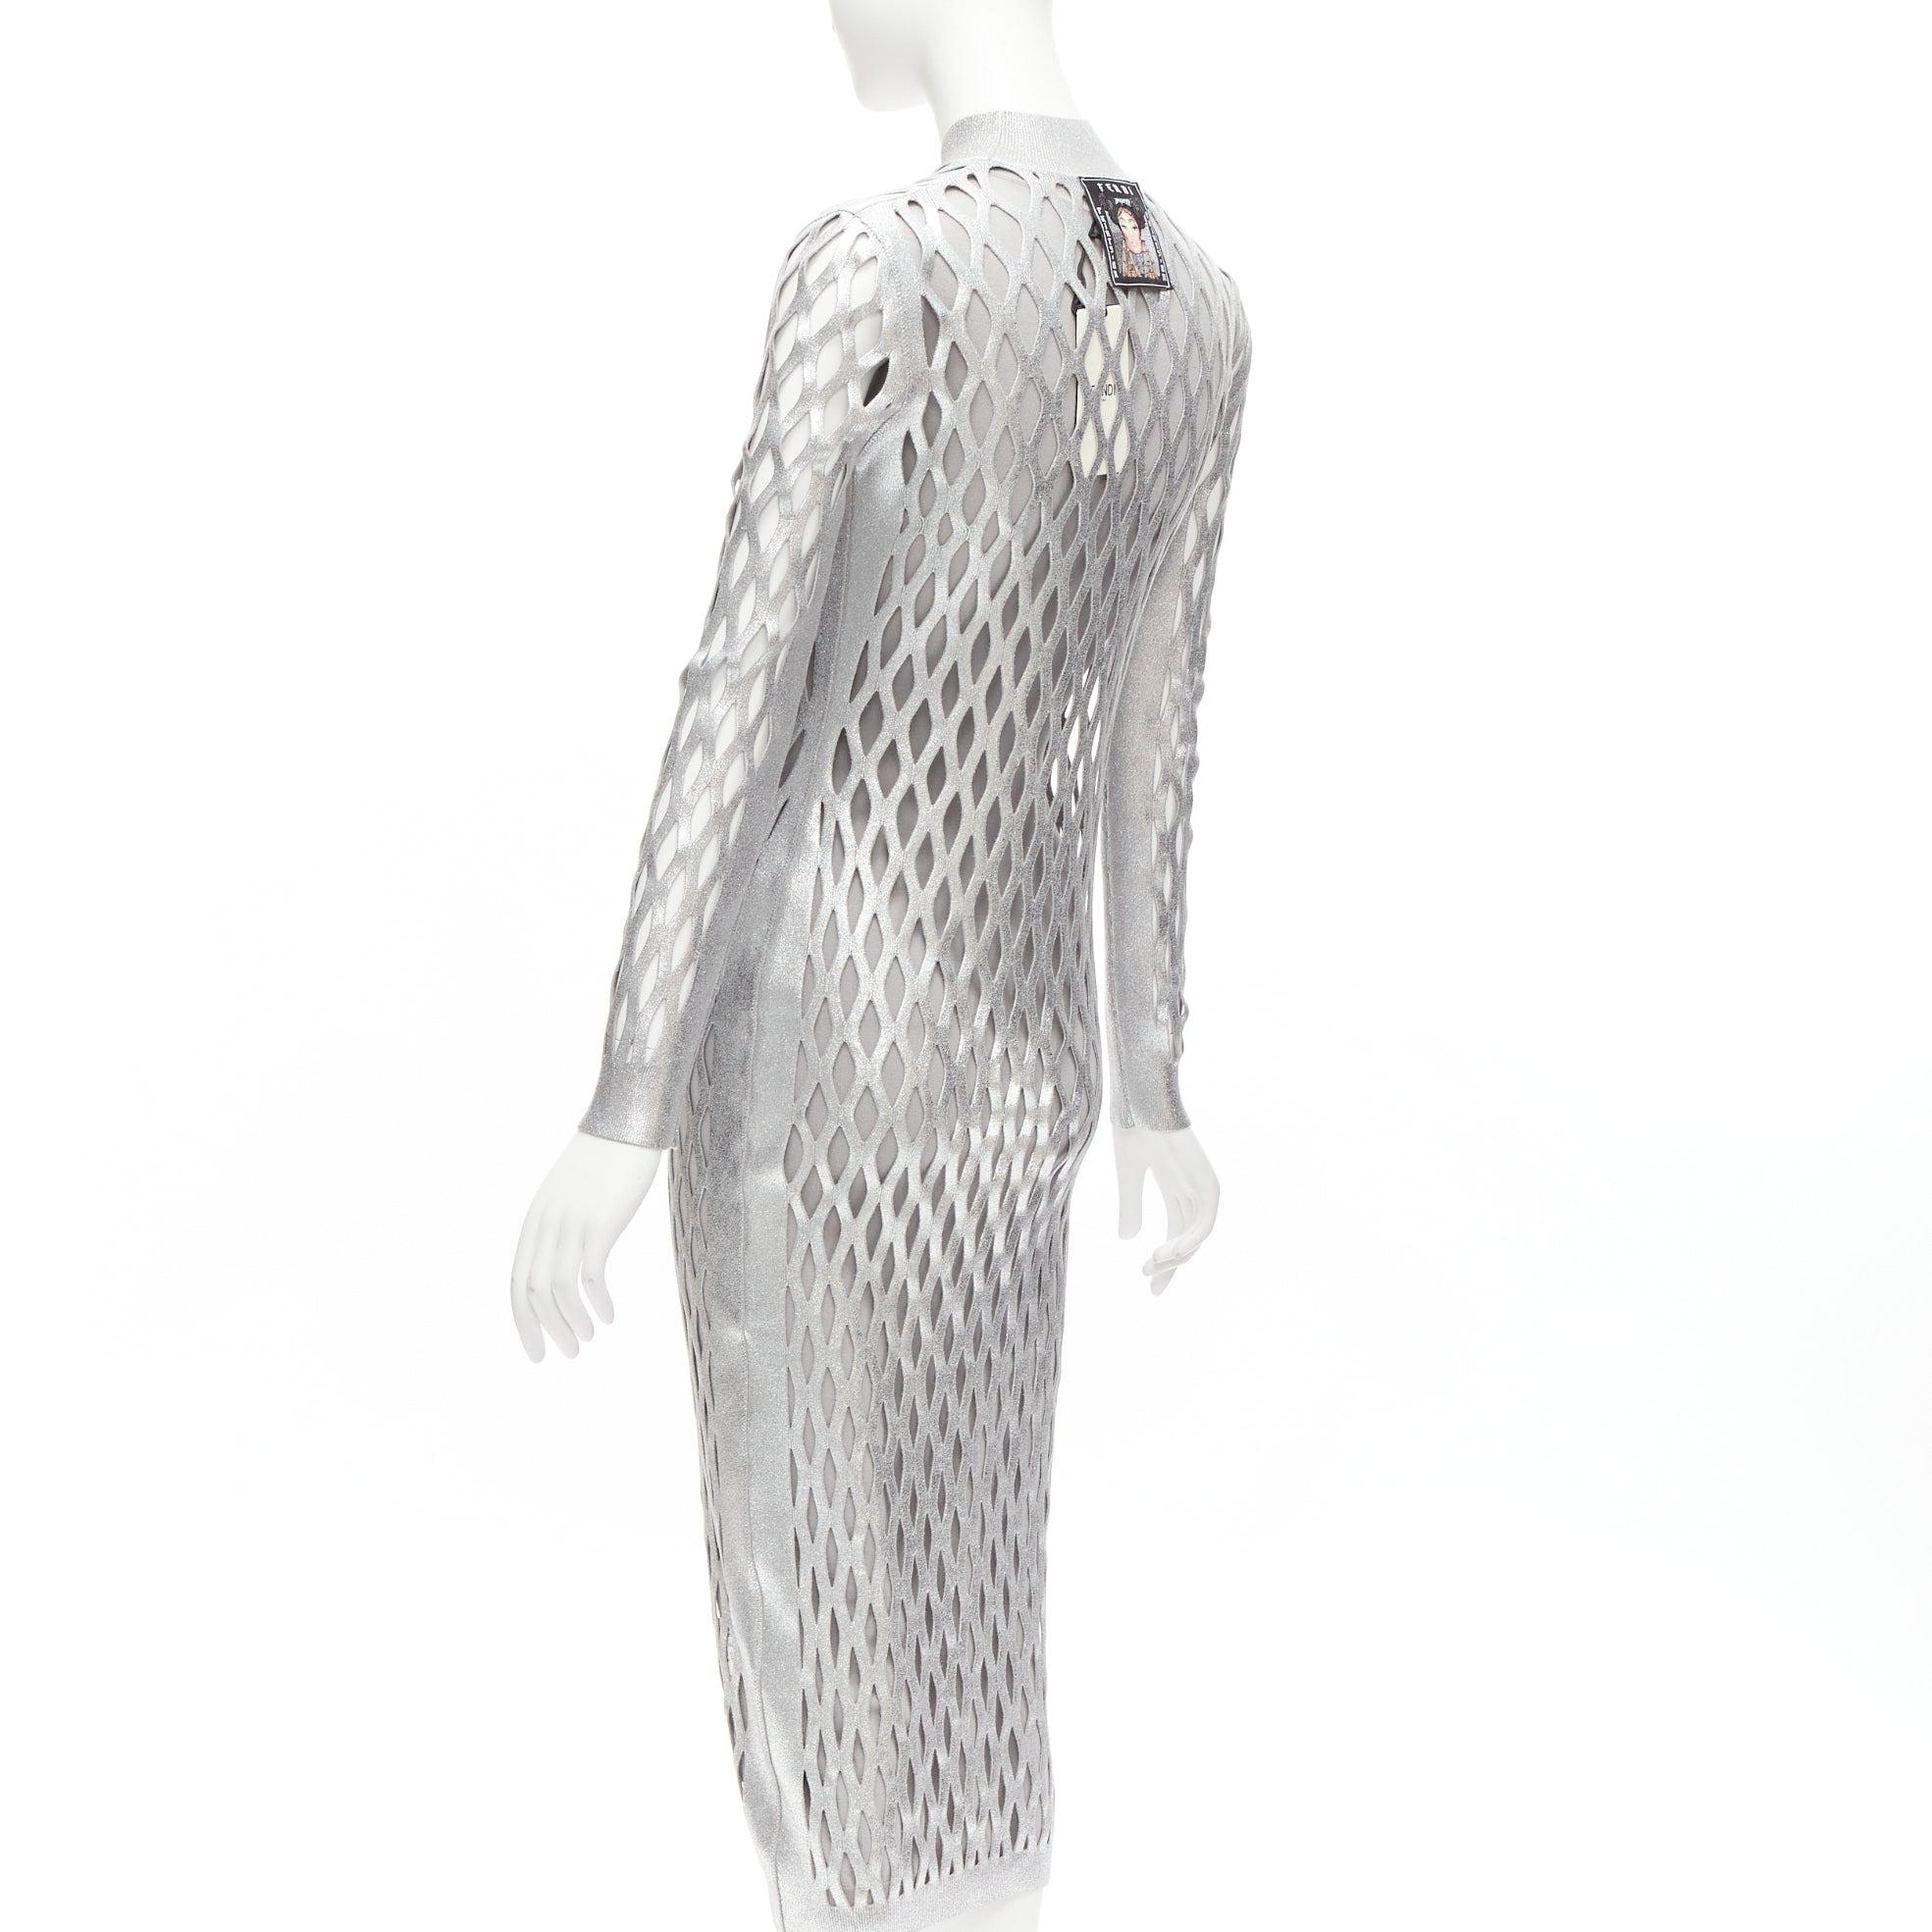 new FENDI Nicki Minaj 2019 Runway Abito silver net cut out lined dress IT42 M 1